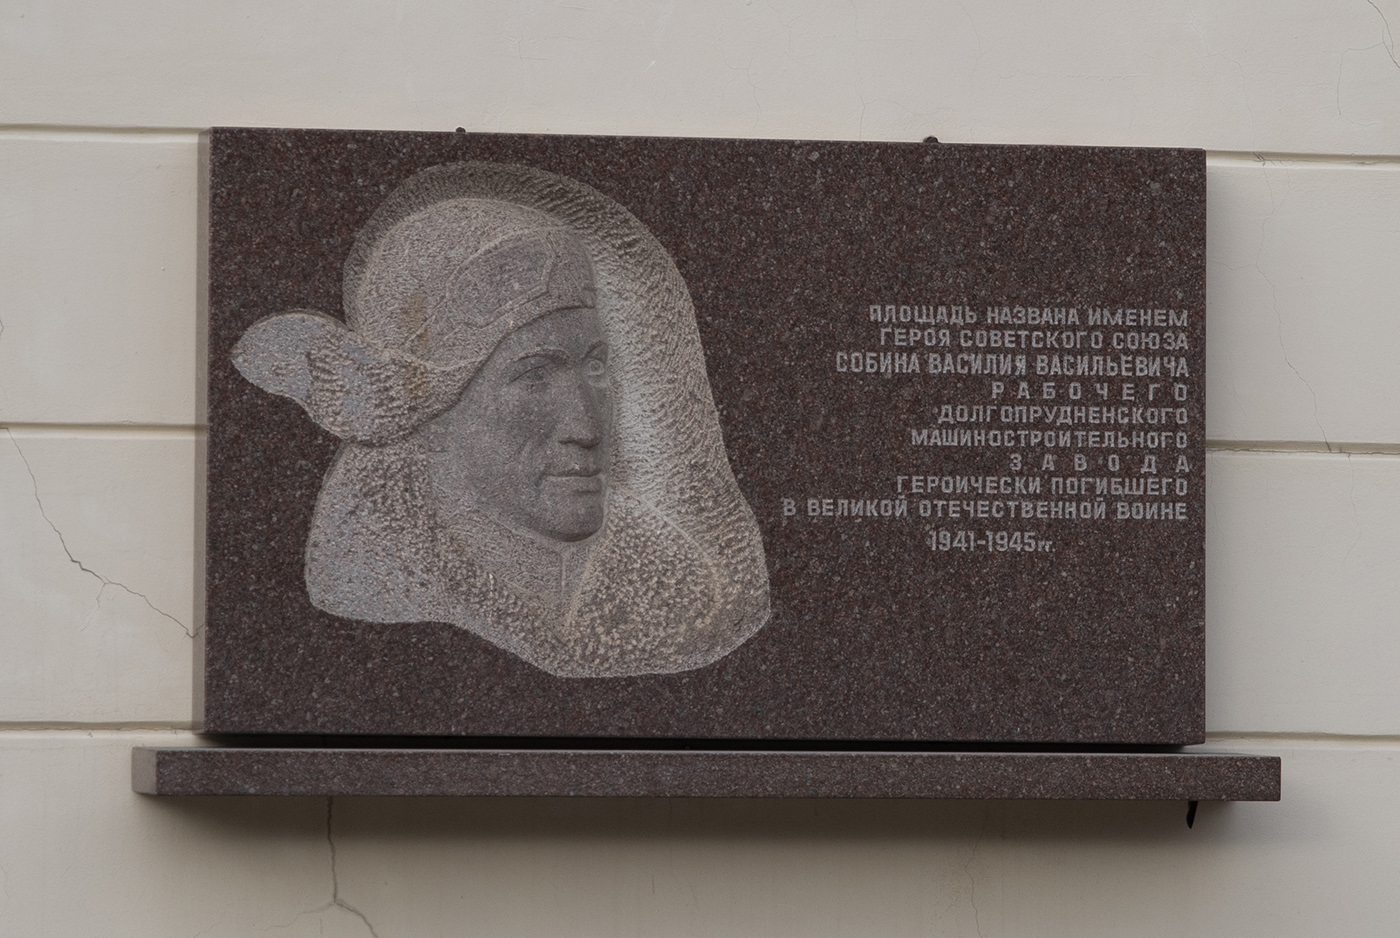 Dolgoprudny, Площадь Собина, 3. Dolgoprudny — Memorial plaques